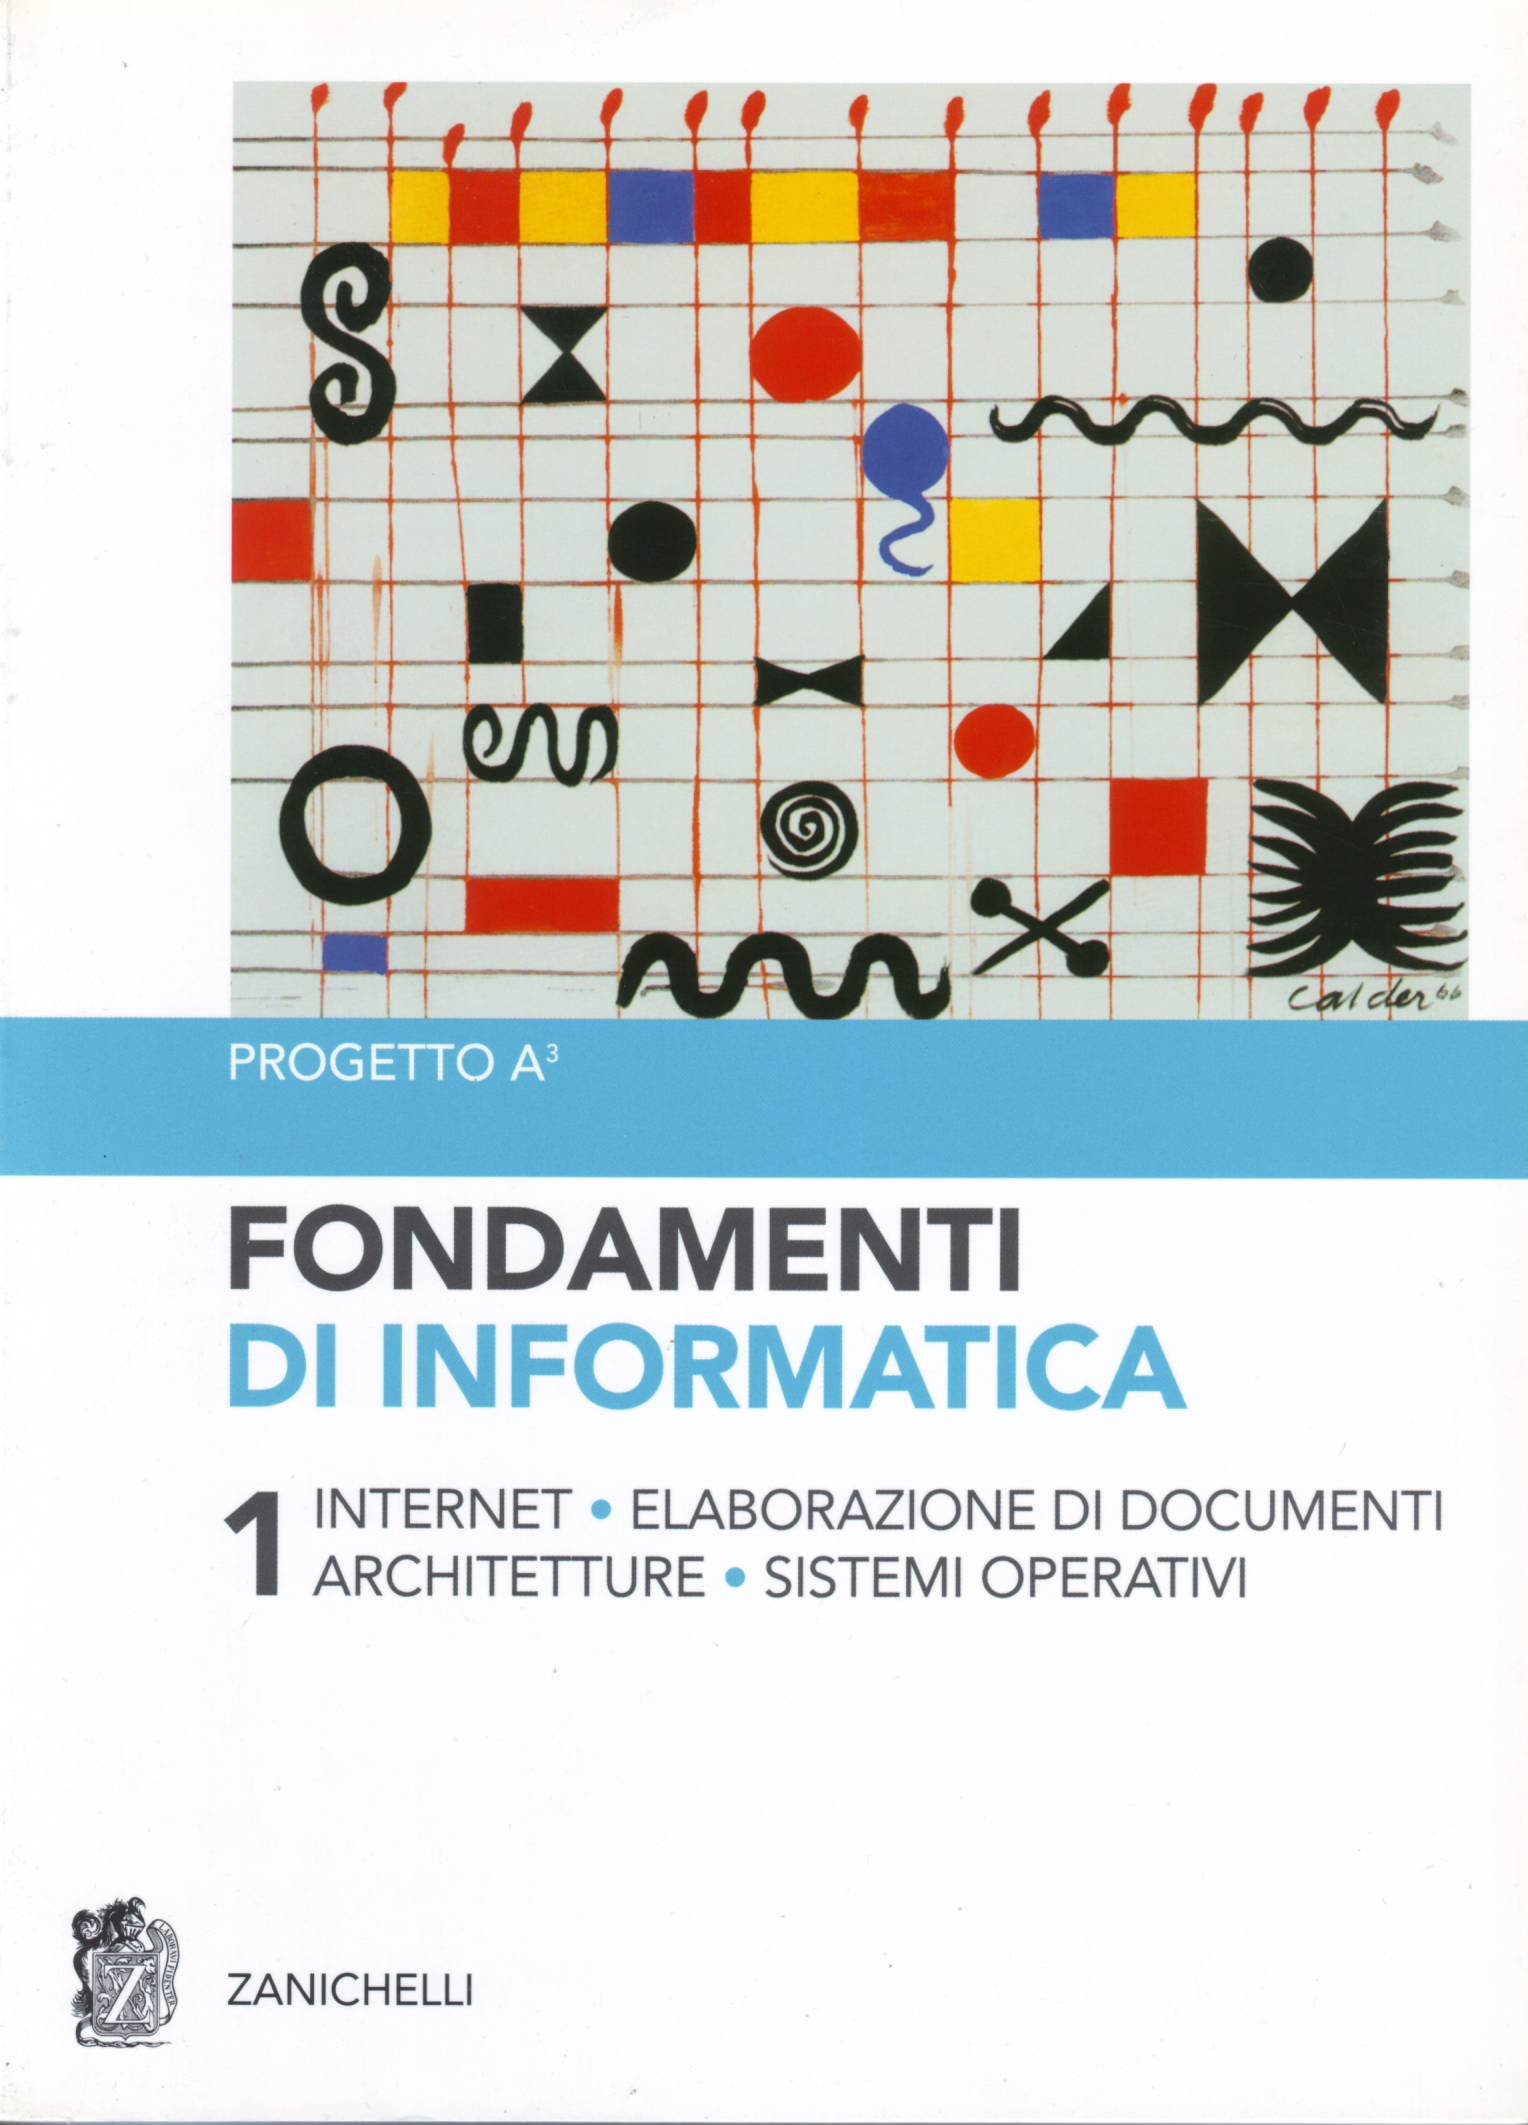 Fondamenti di informatica - Volume 1 - Internet, Elaborazione di documenti, Architetture, Sistemi operativi